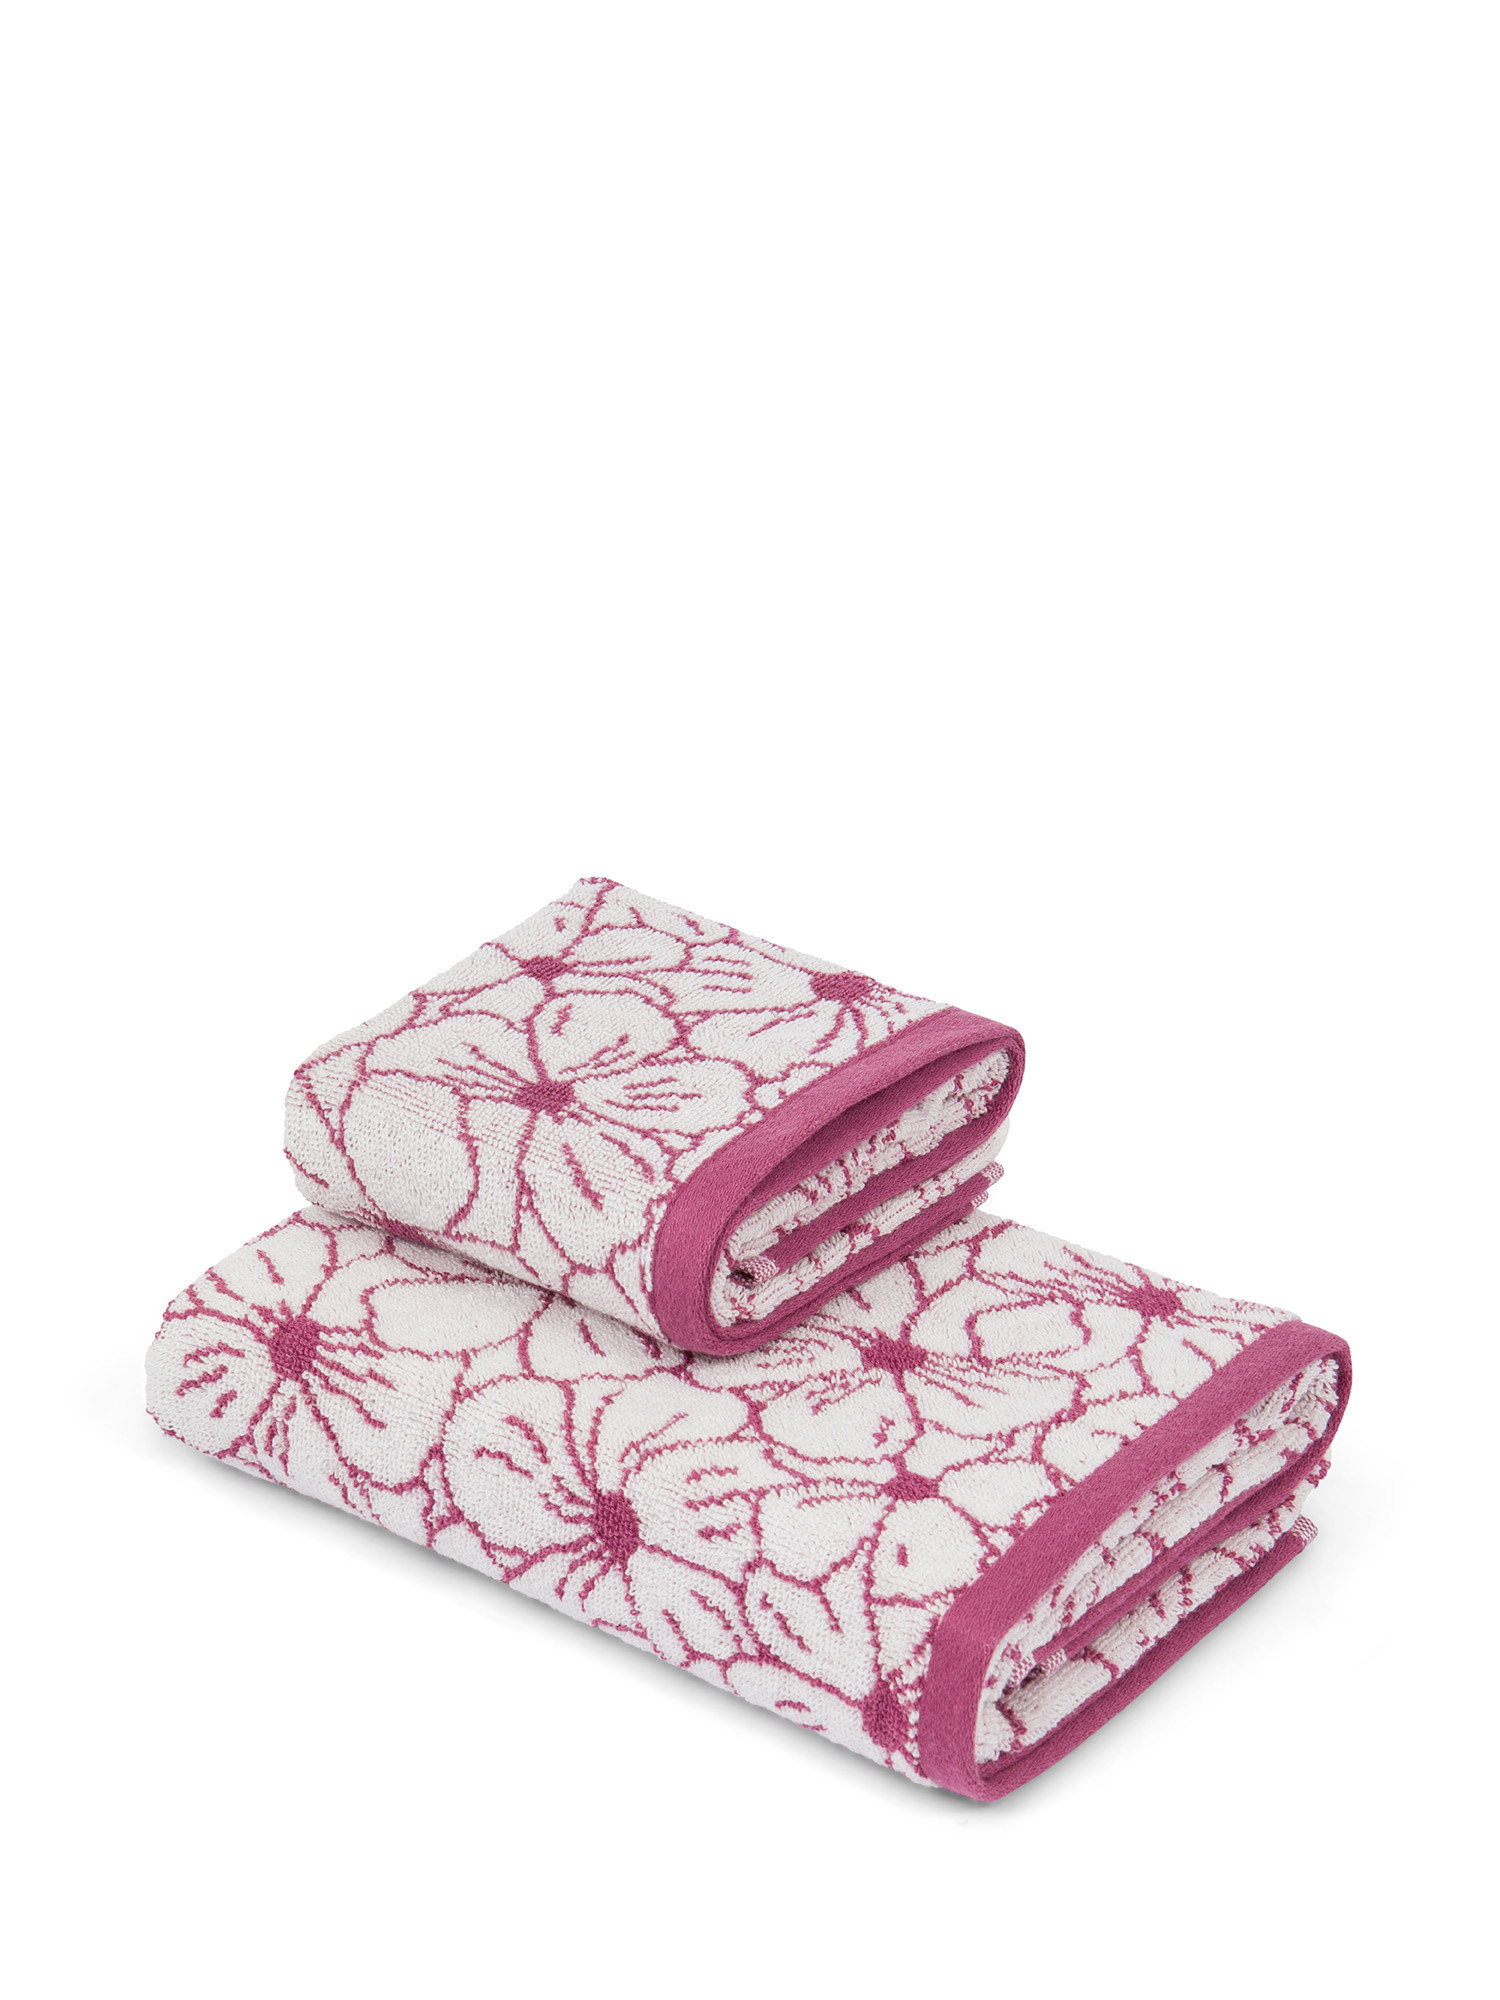 Asciugamano in spugna di cotone motivo fiori, Viola malva, large image number 0